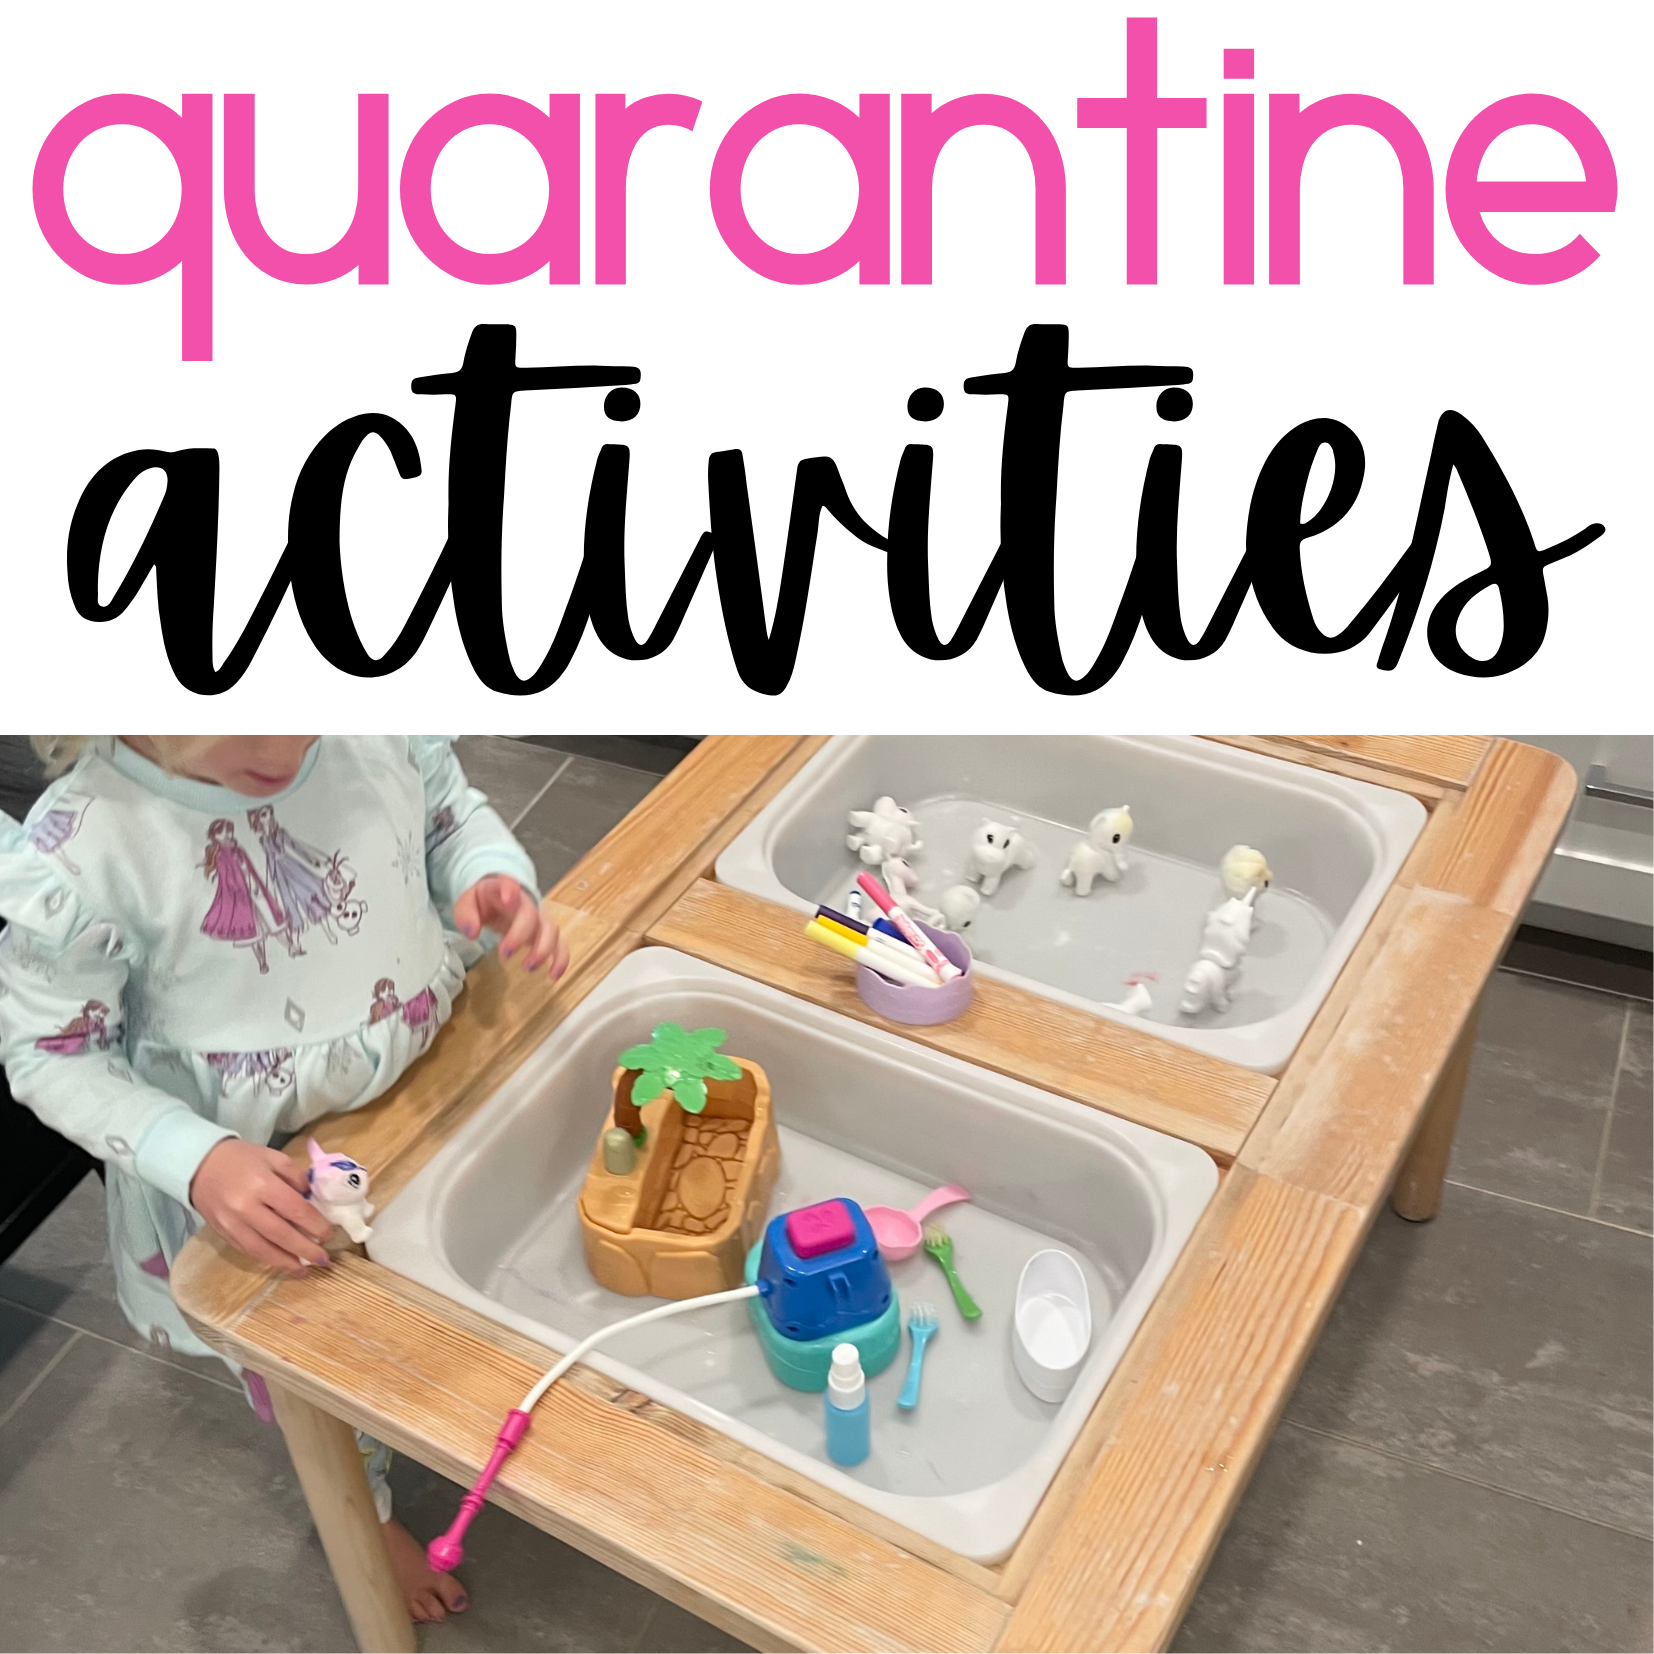 Favorite activities to do during quarantine